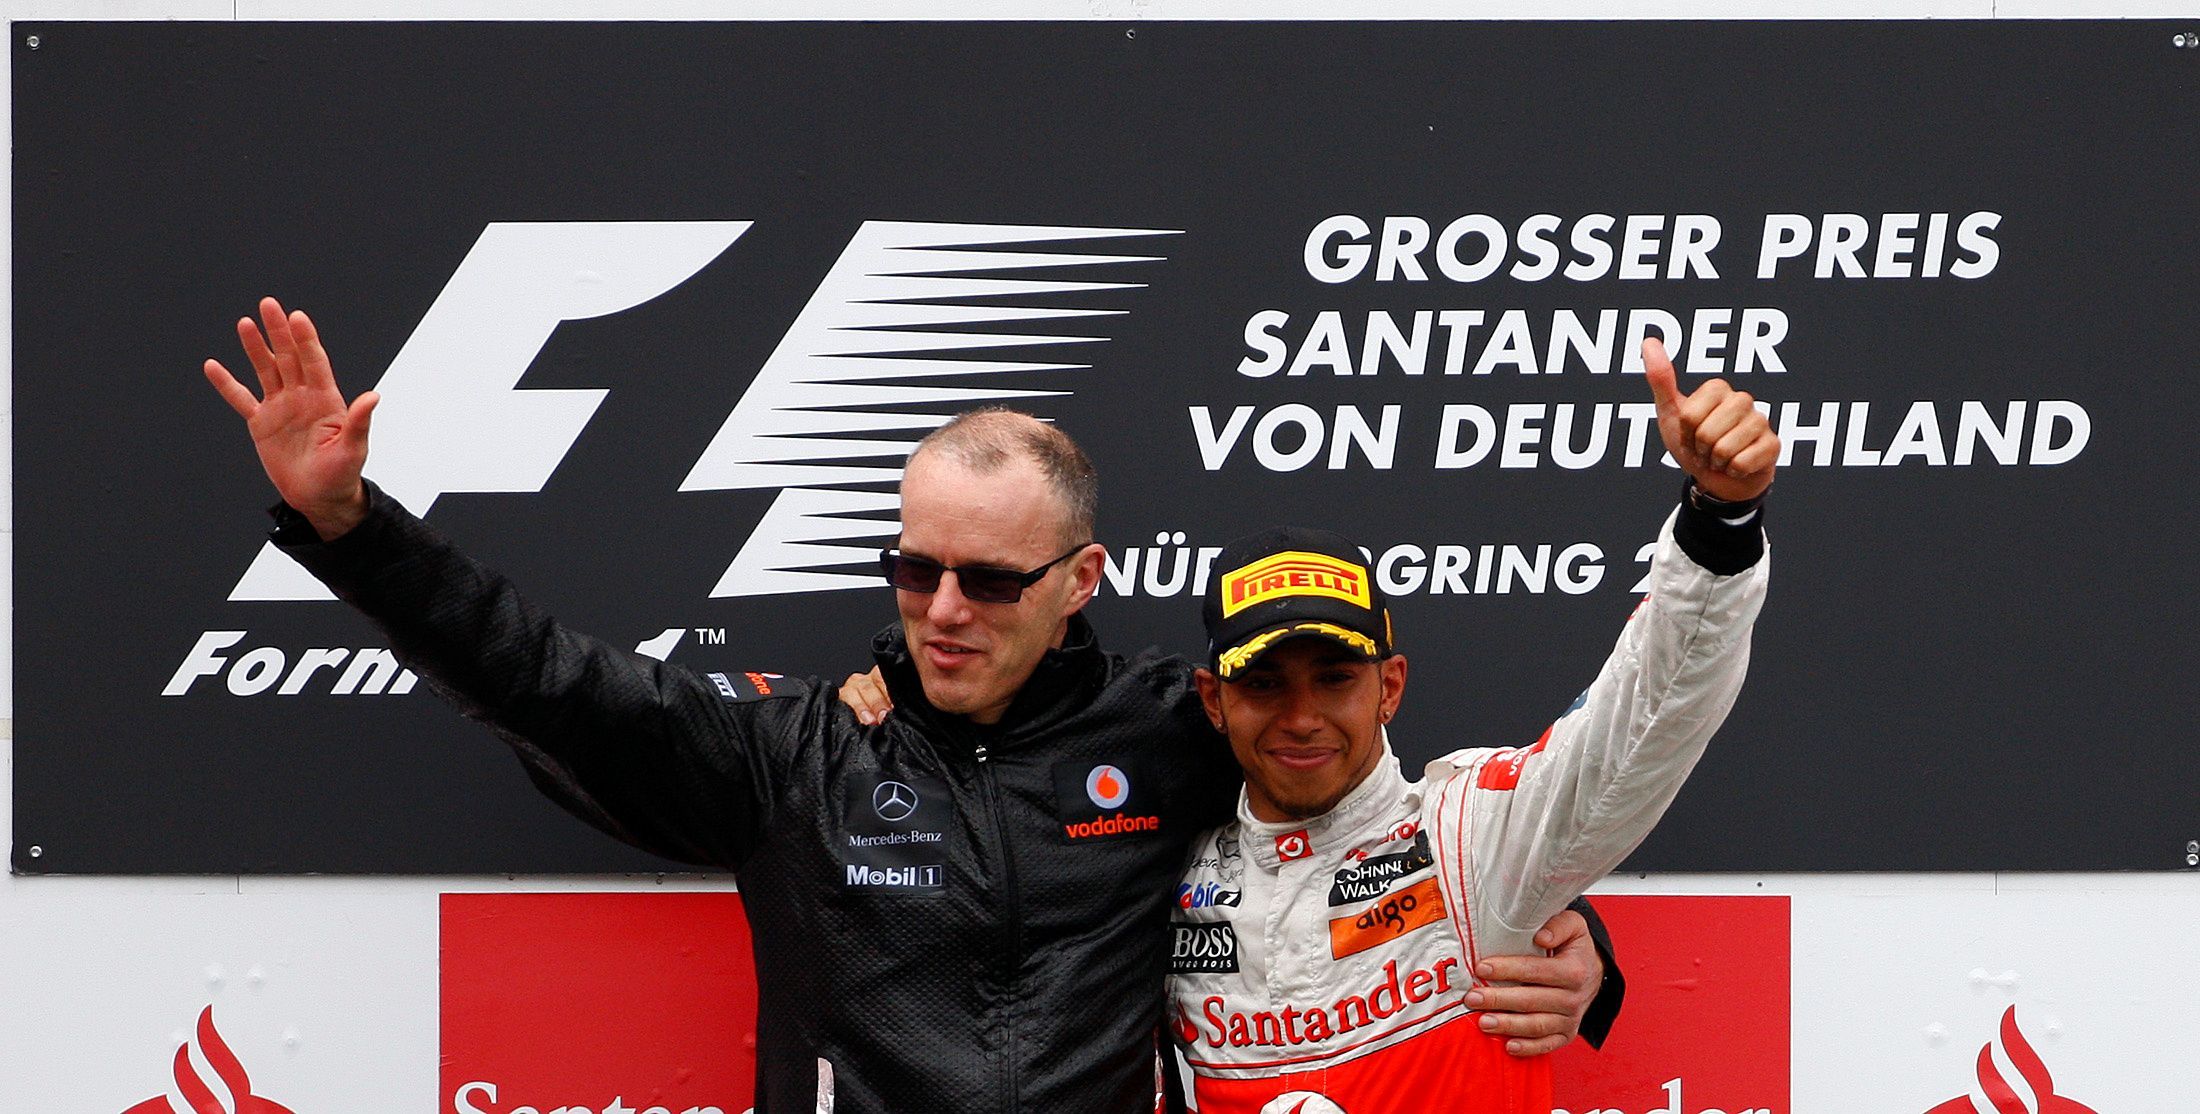 Simon Roberts a Lewis Hamilton z McLarenu slaví triumf v GP Německa 2011